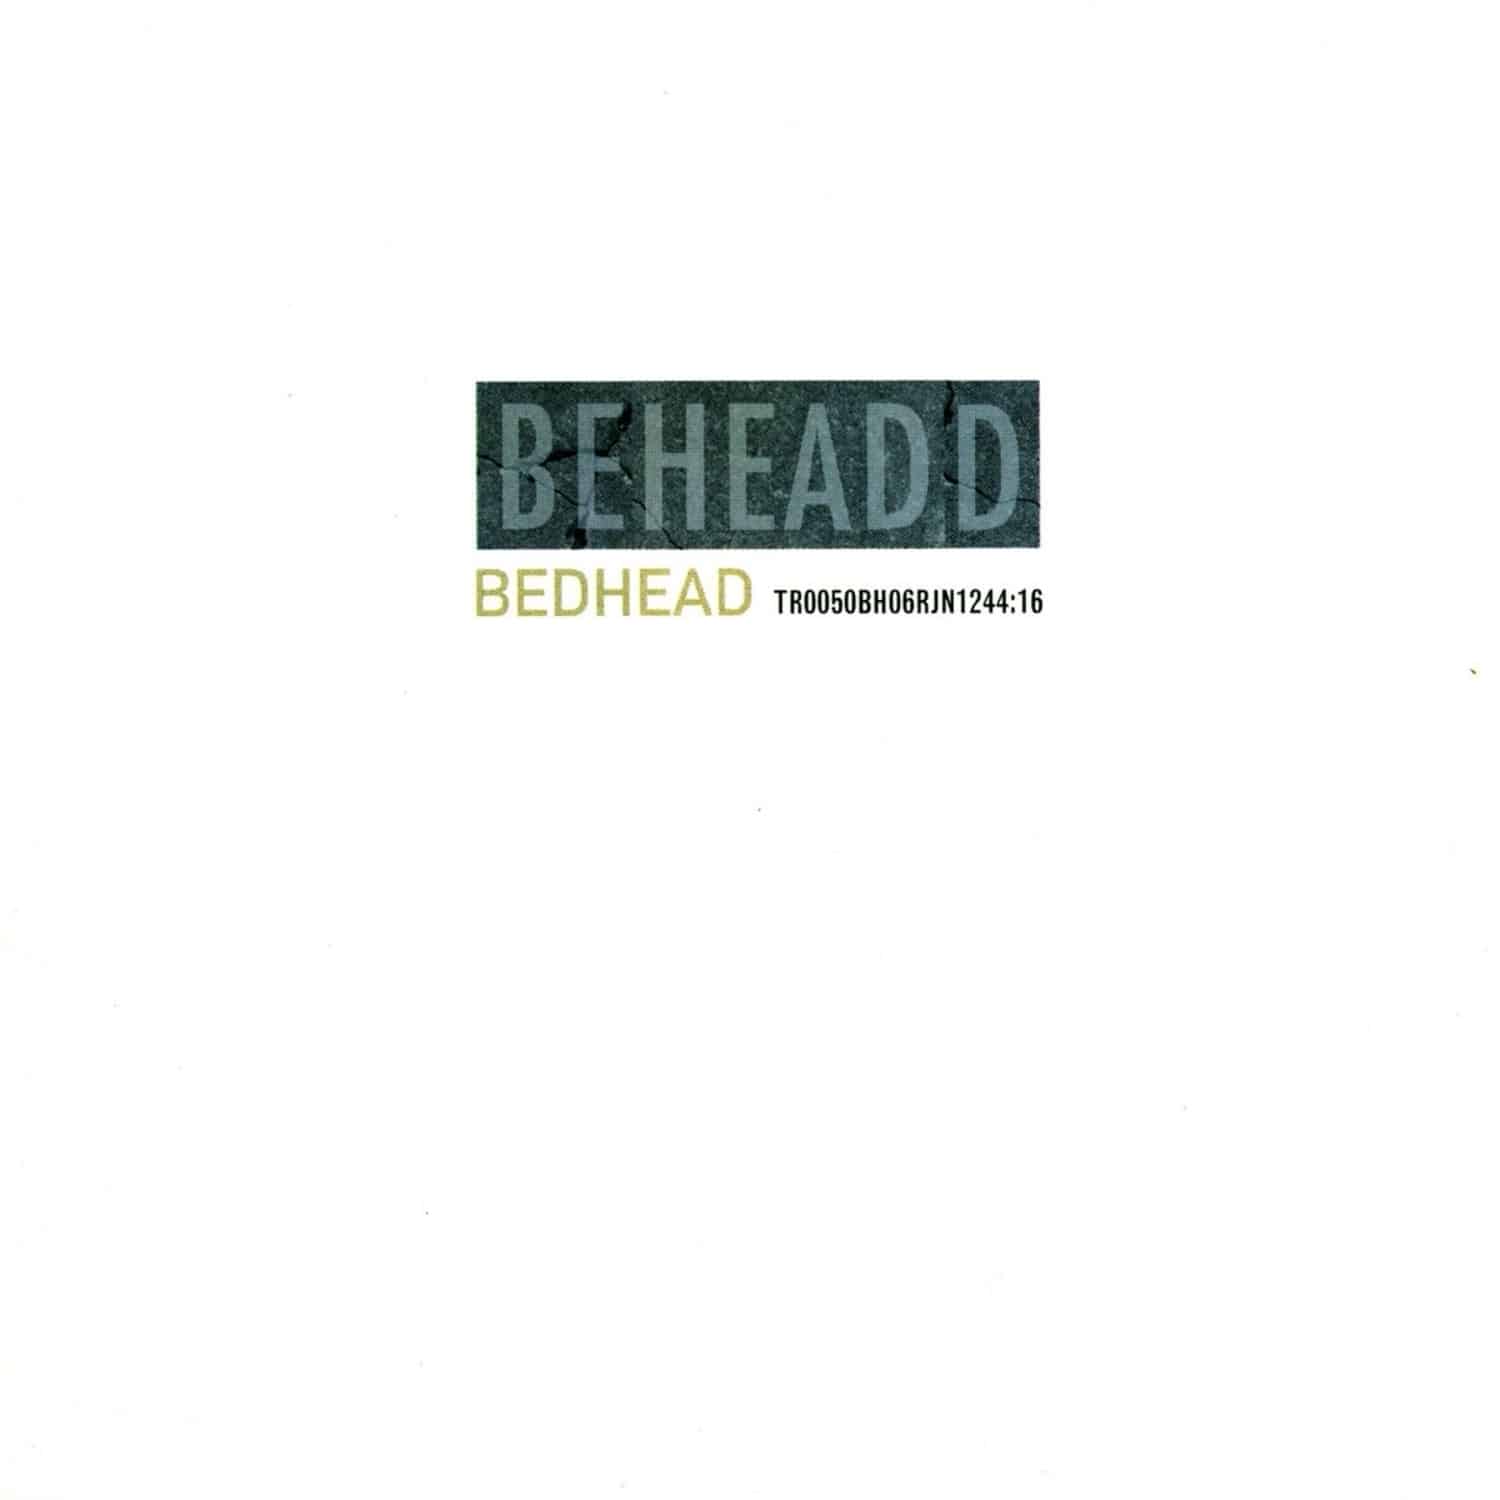 Bedhead - BEHEADED 